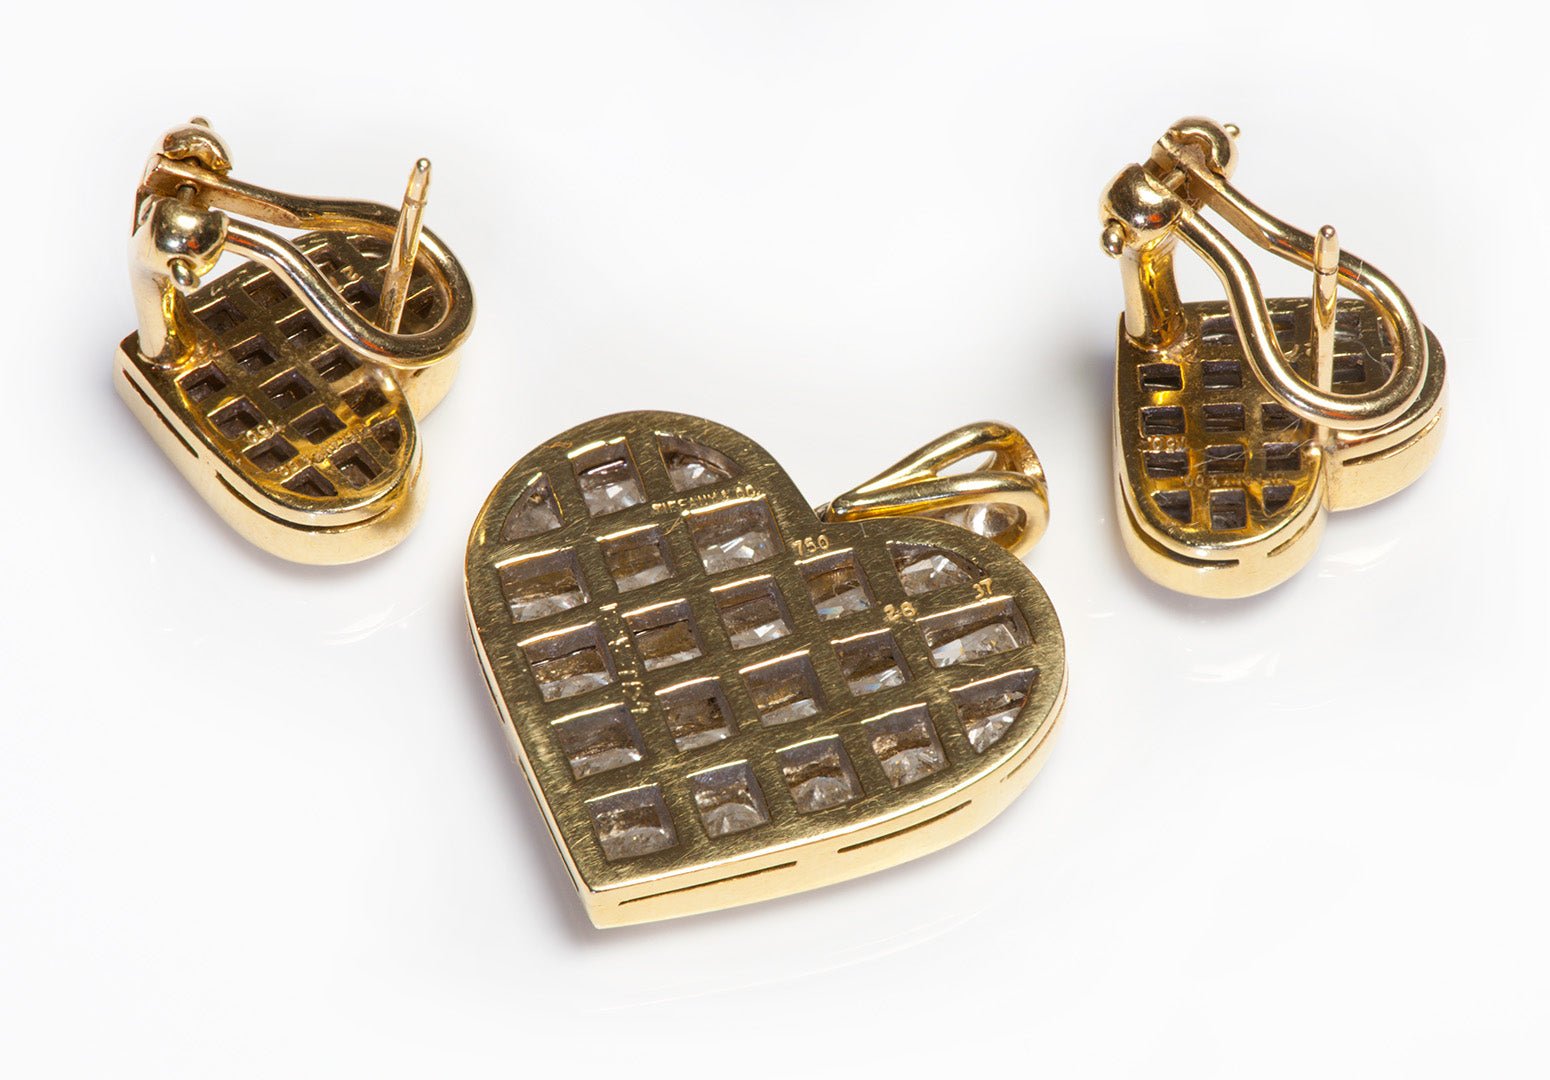 Tiffany & Co. 18K Gold Radiant Diamond Heart Pendant Earrings